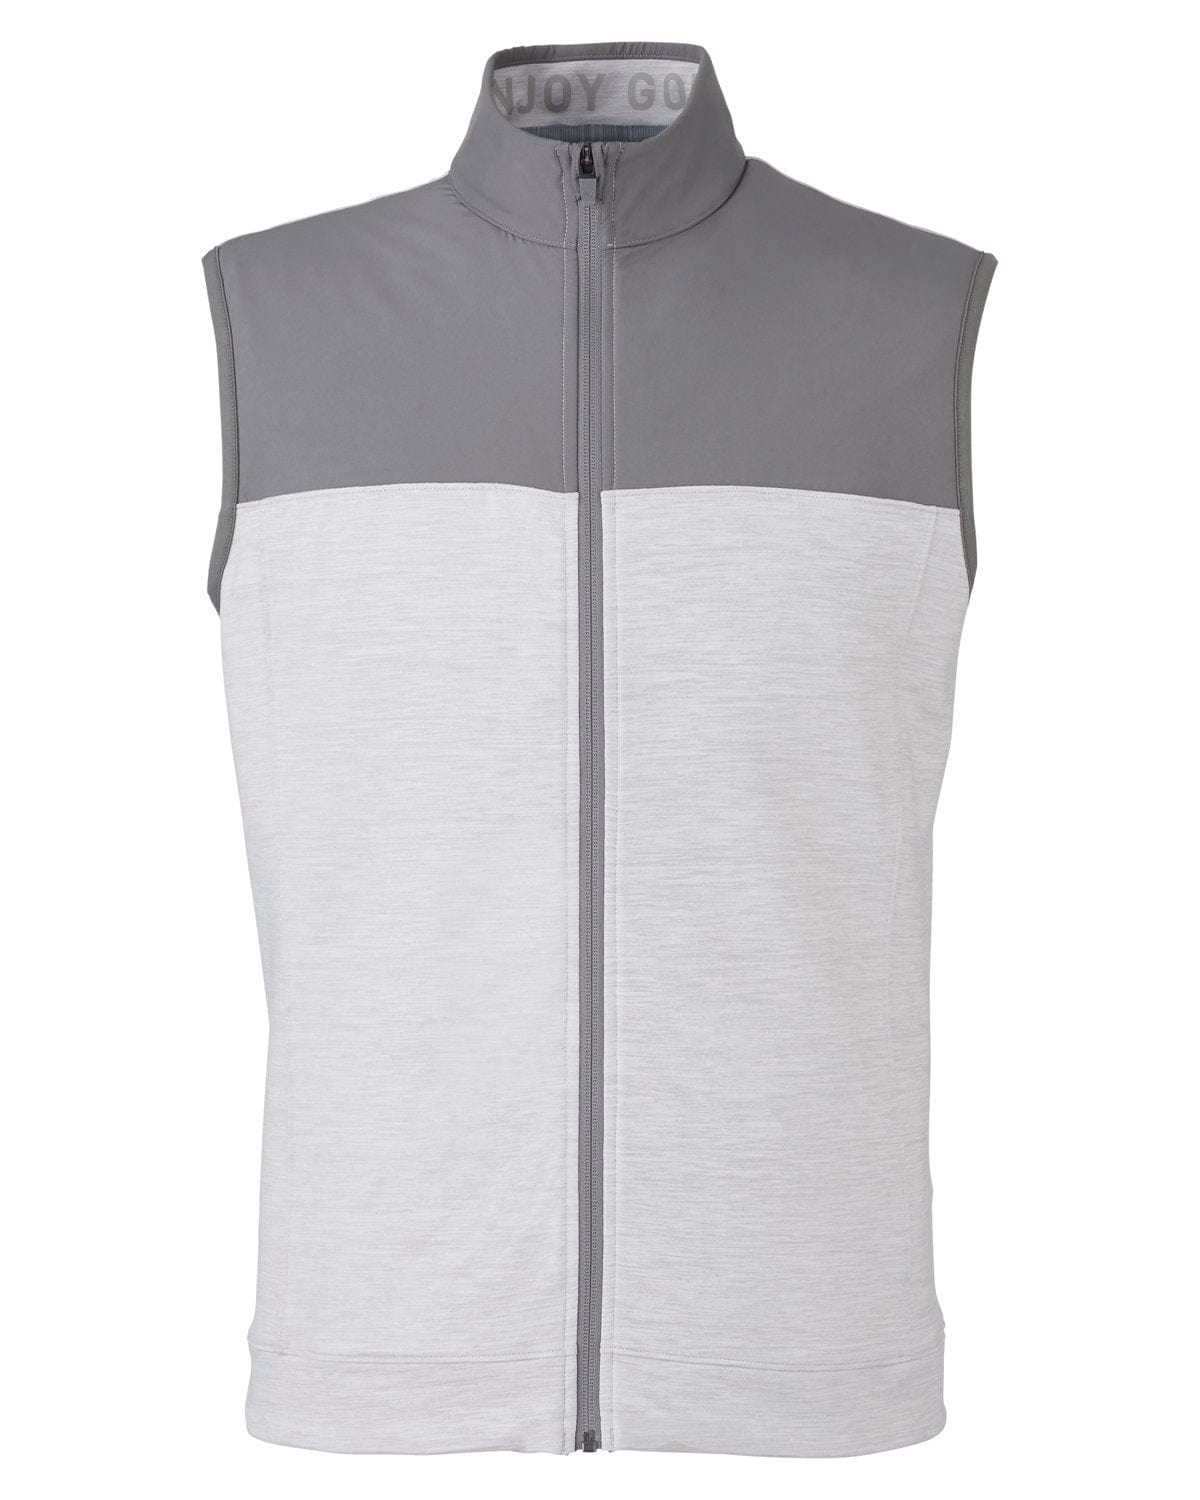 Puma Golf Outerwear S / Quiet Shade/High Rise Heather Puma - Men's Cloudspun Colorblock Vest